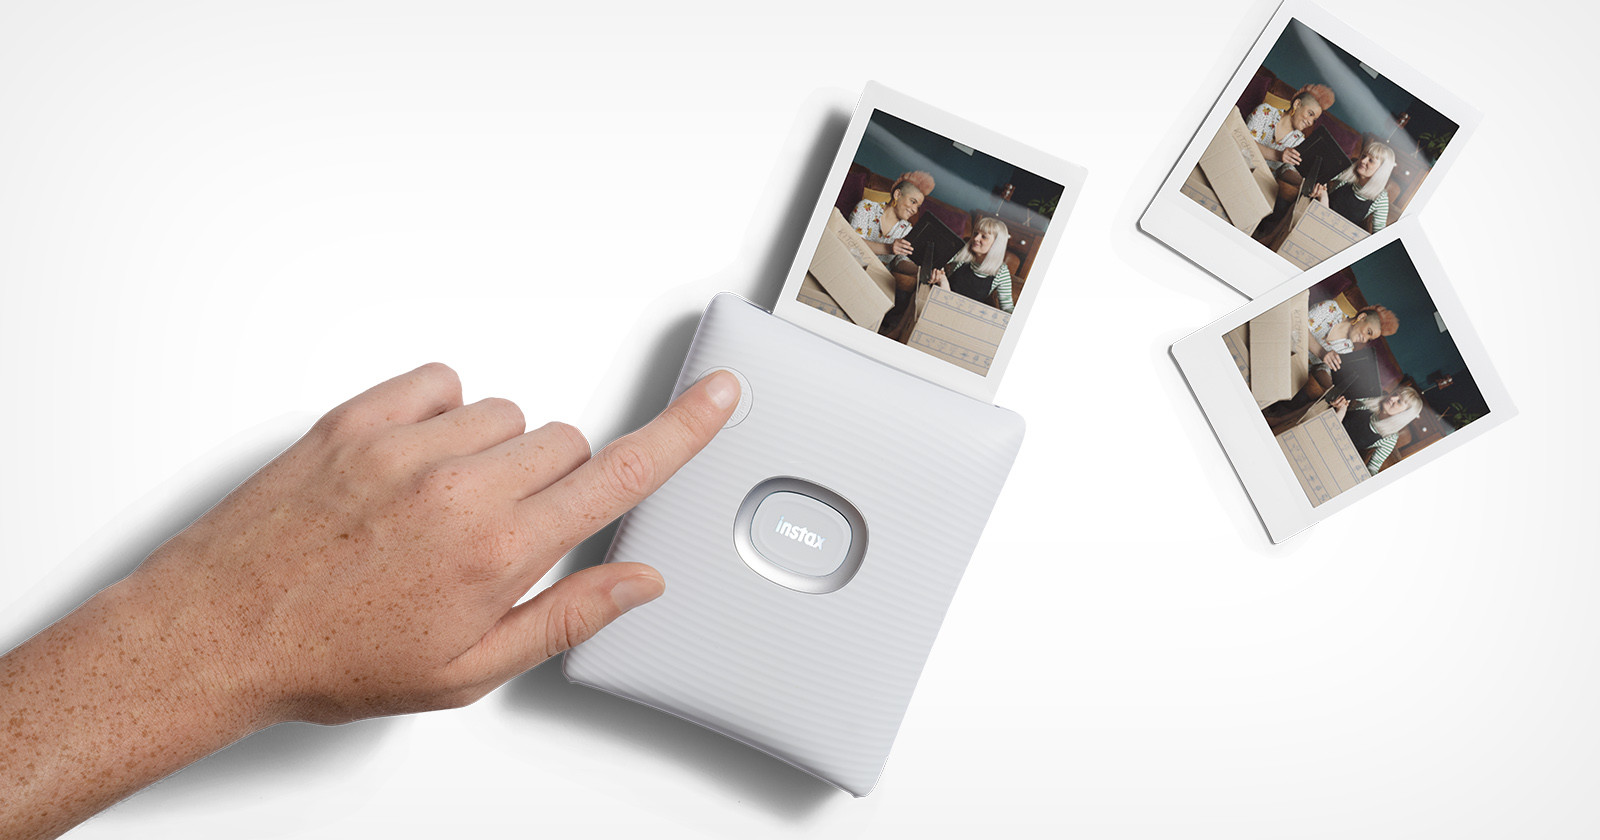 Fujifilms New Instax Printer Brings the Instant Film Look to Smartphones